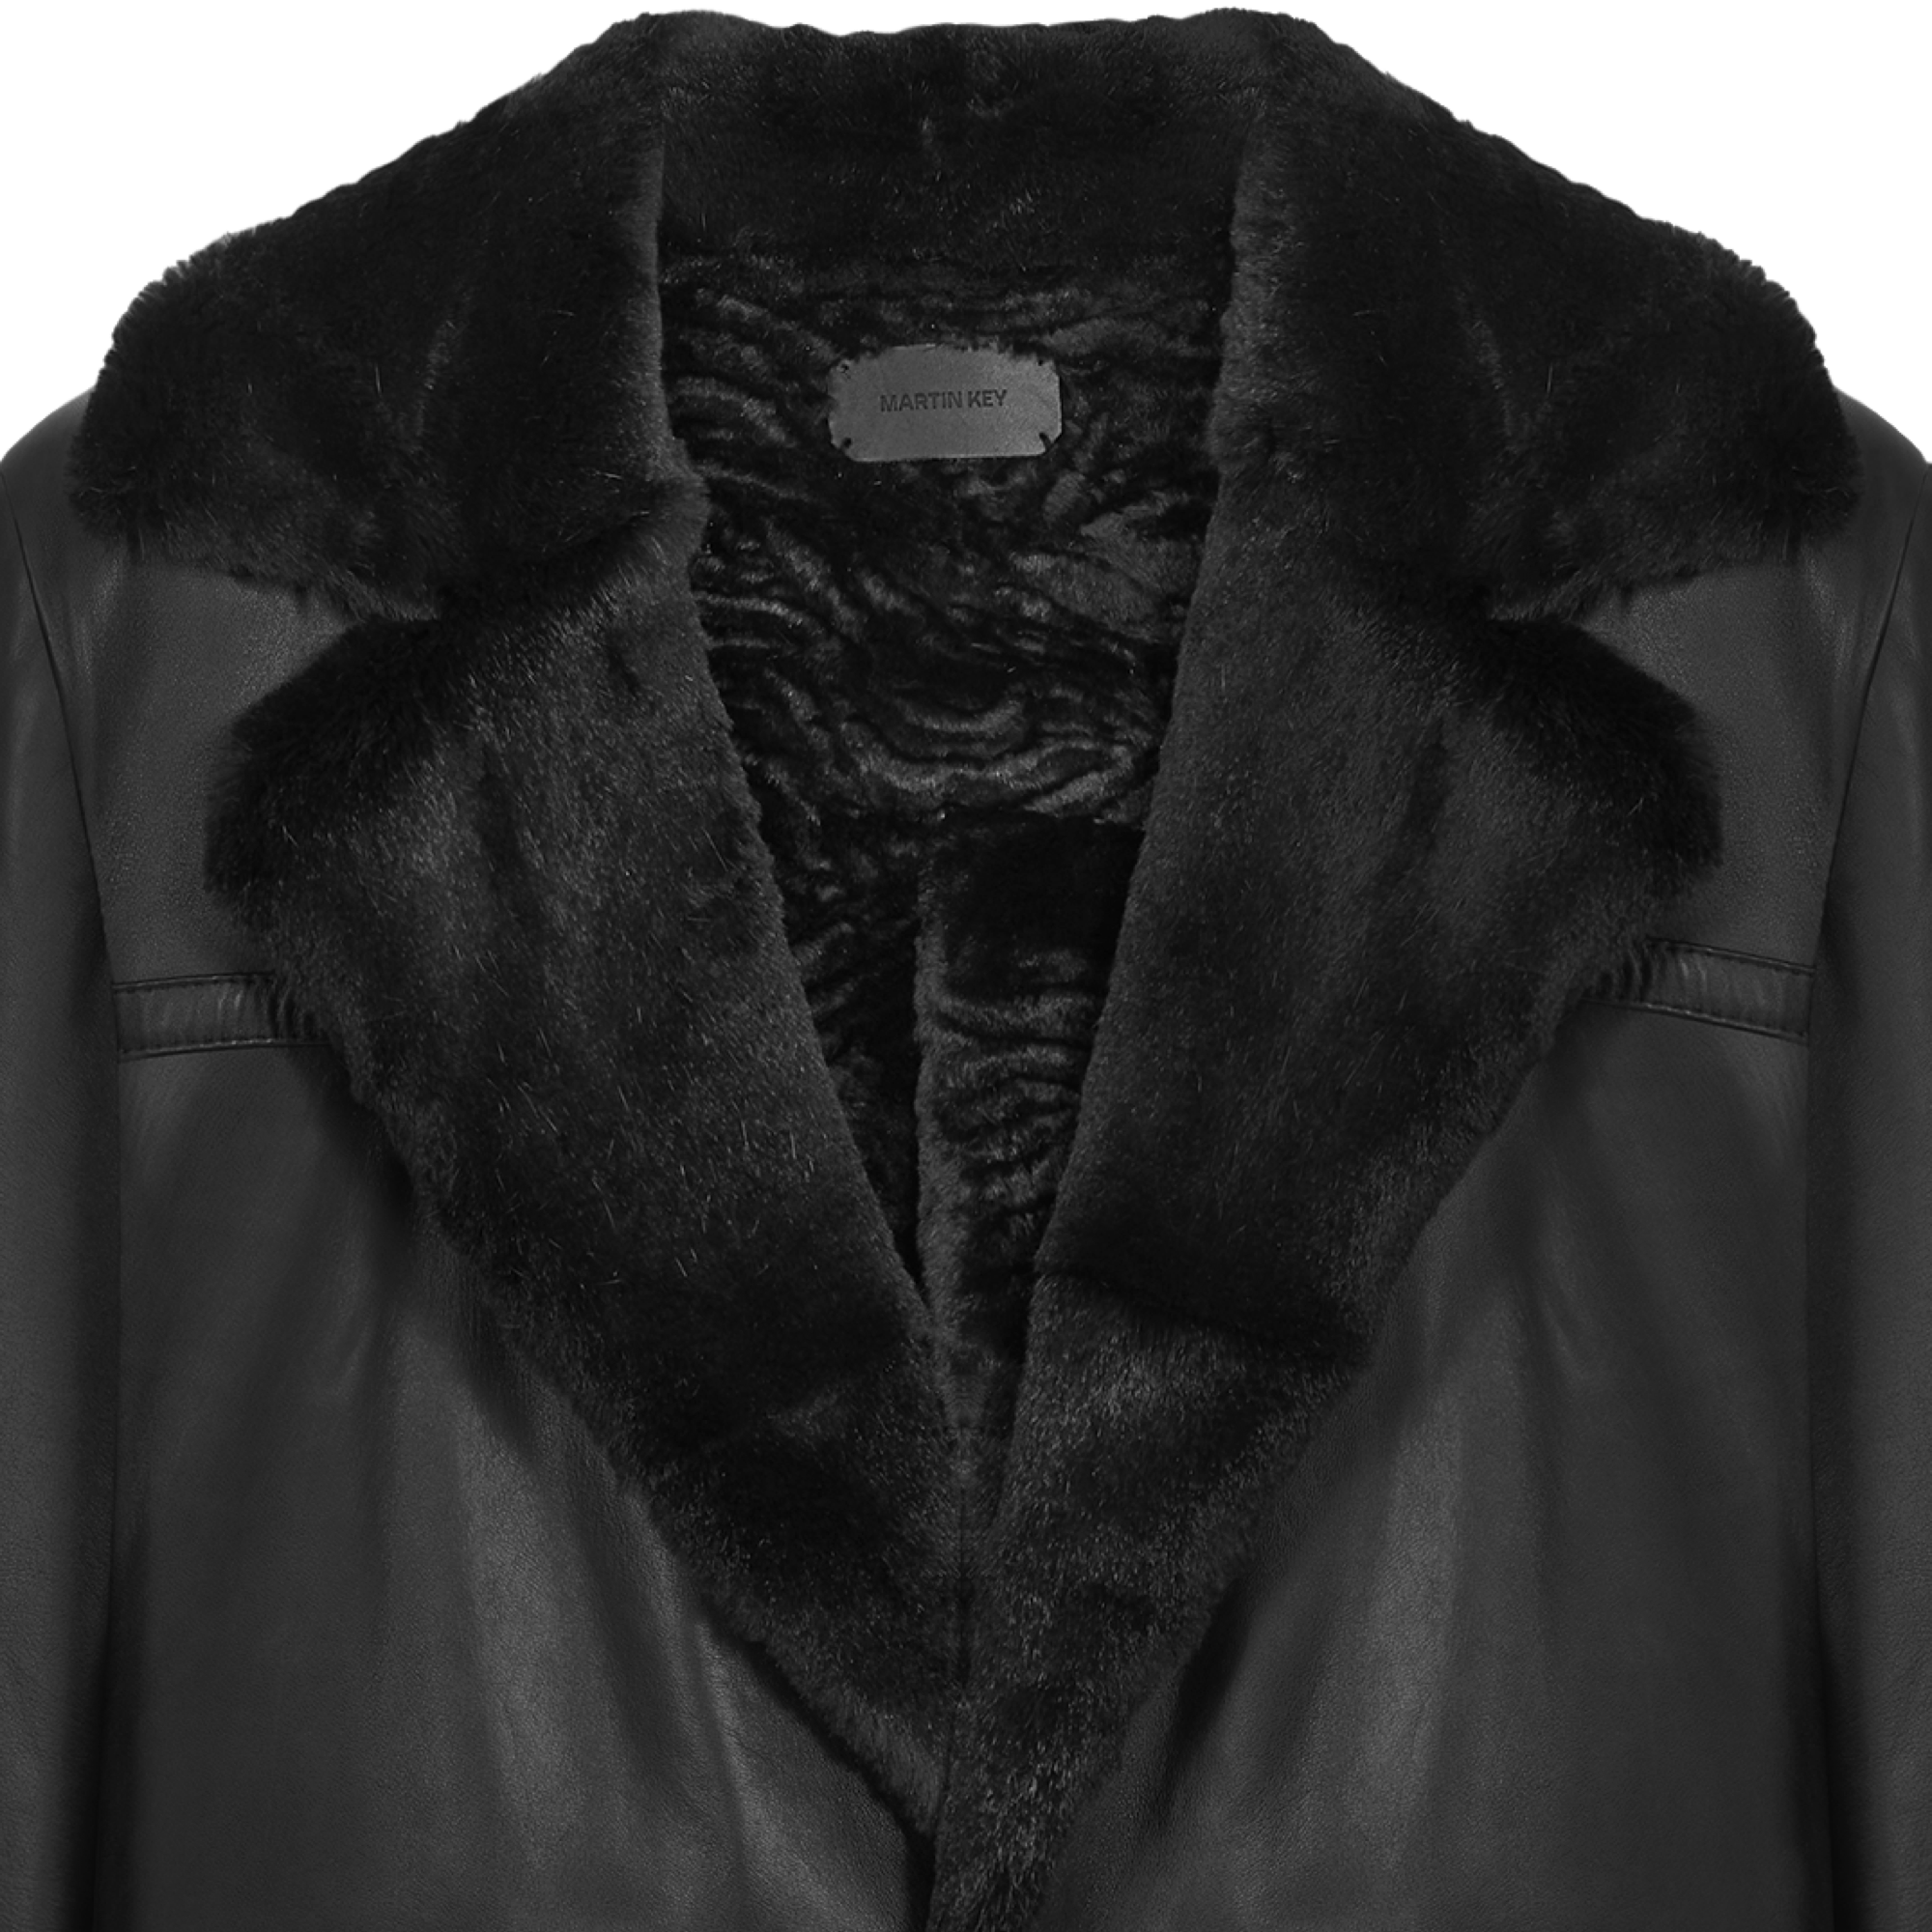 Detail zermatt coat fur